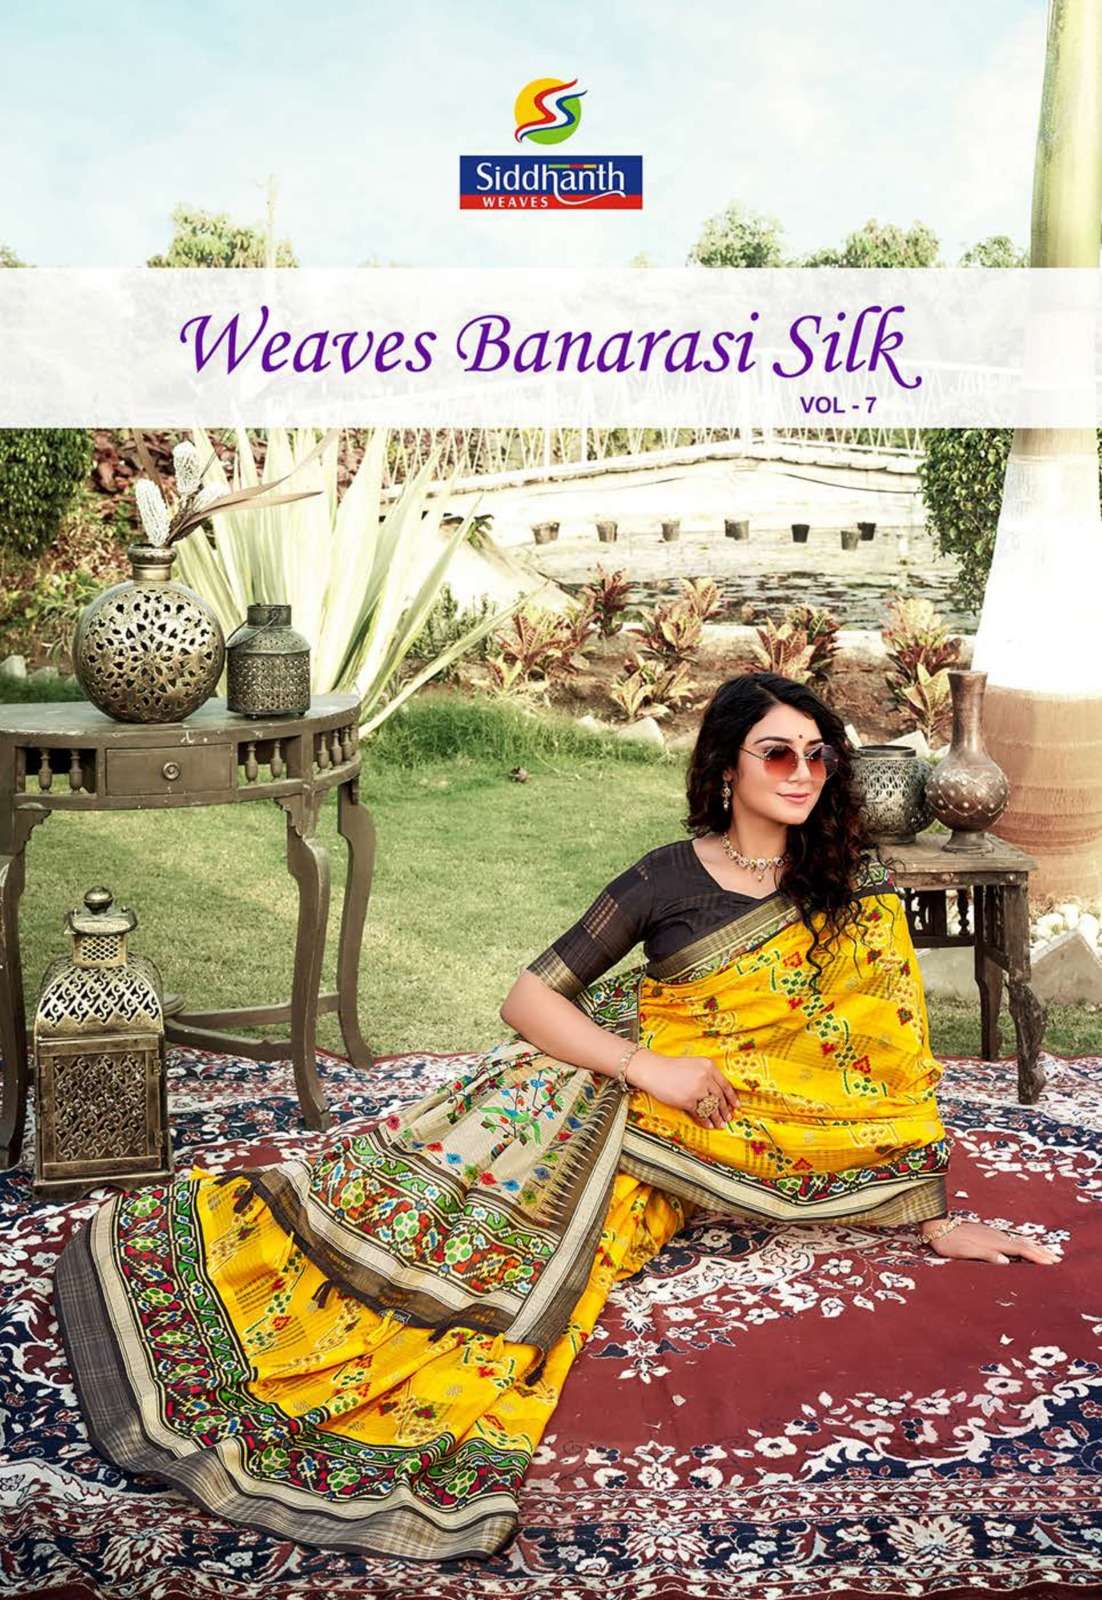 weaves banarasi silk vol 7 by siddhanth weaves authorized saree seller at wholesale 